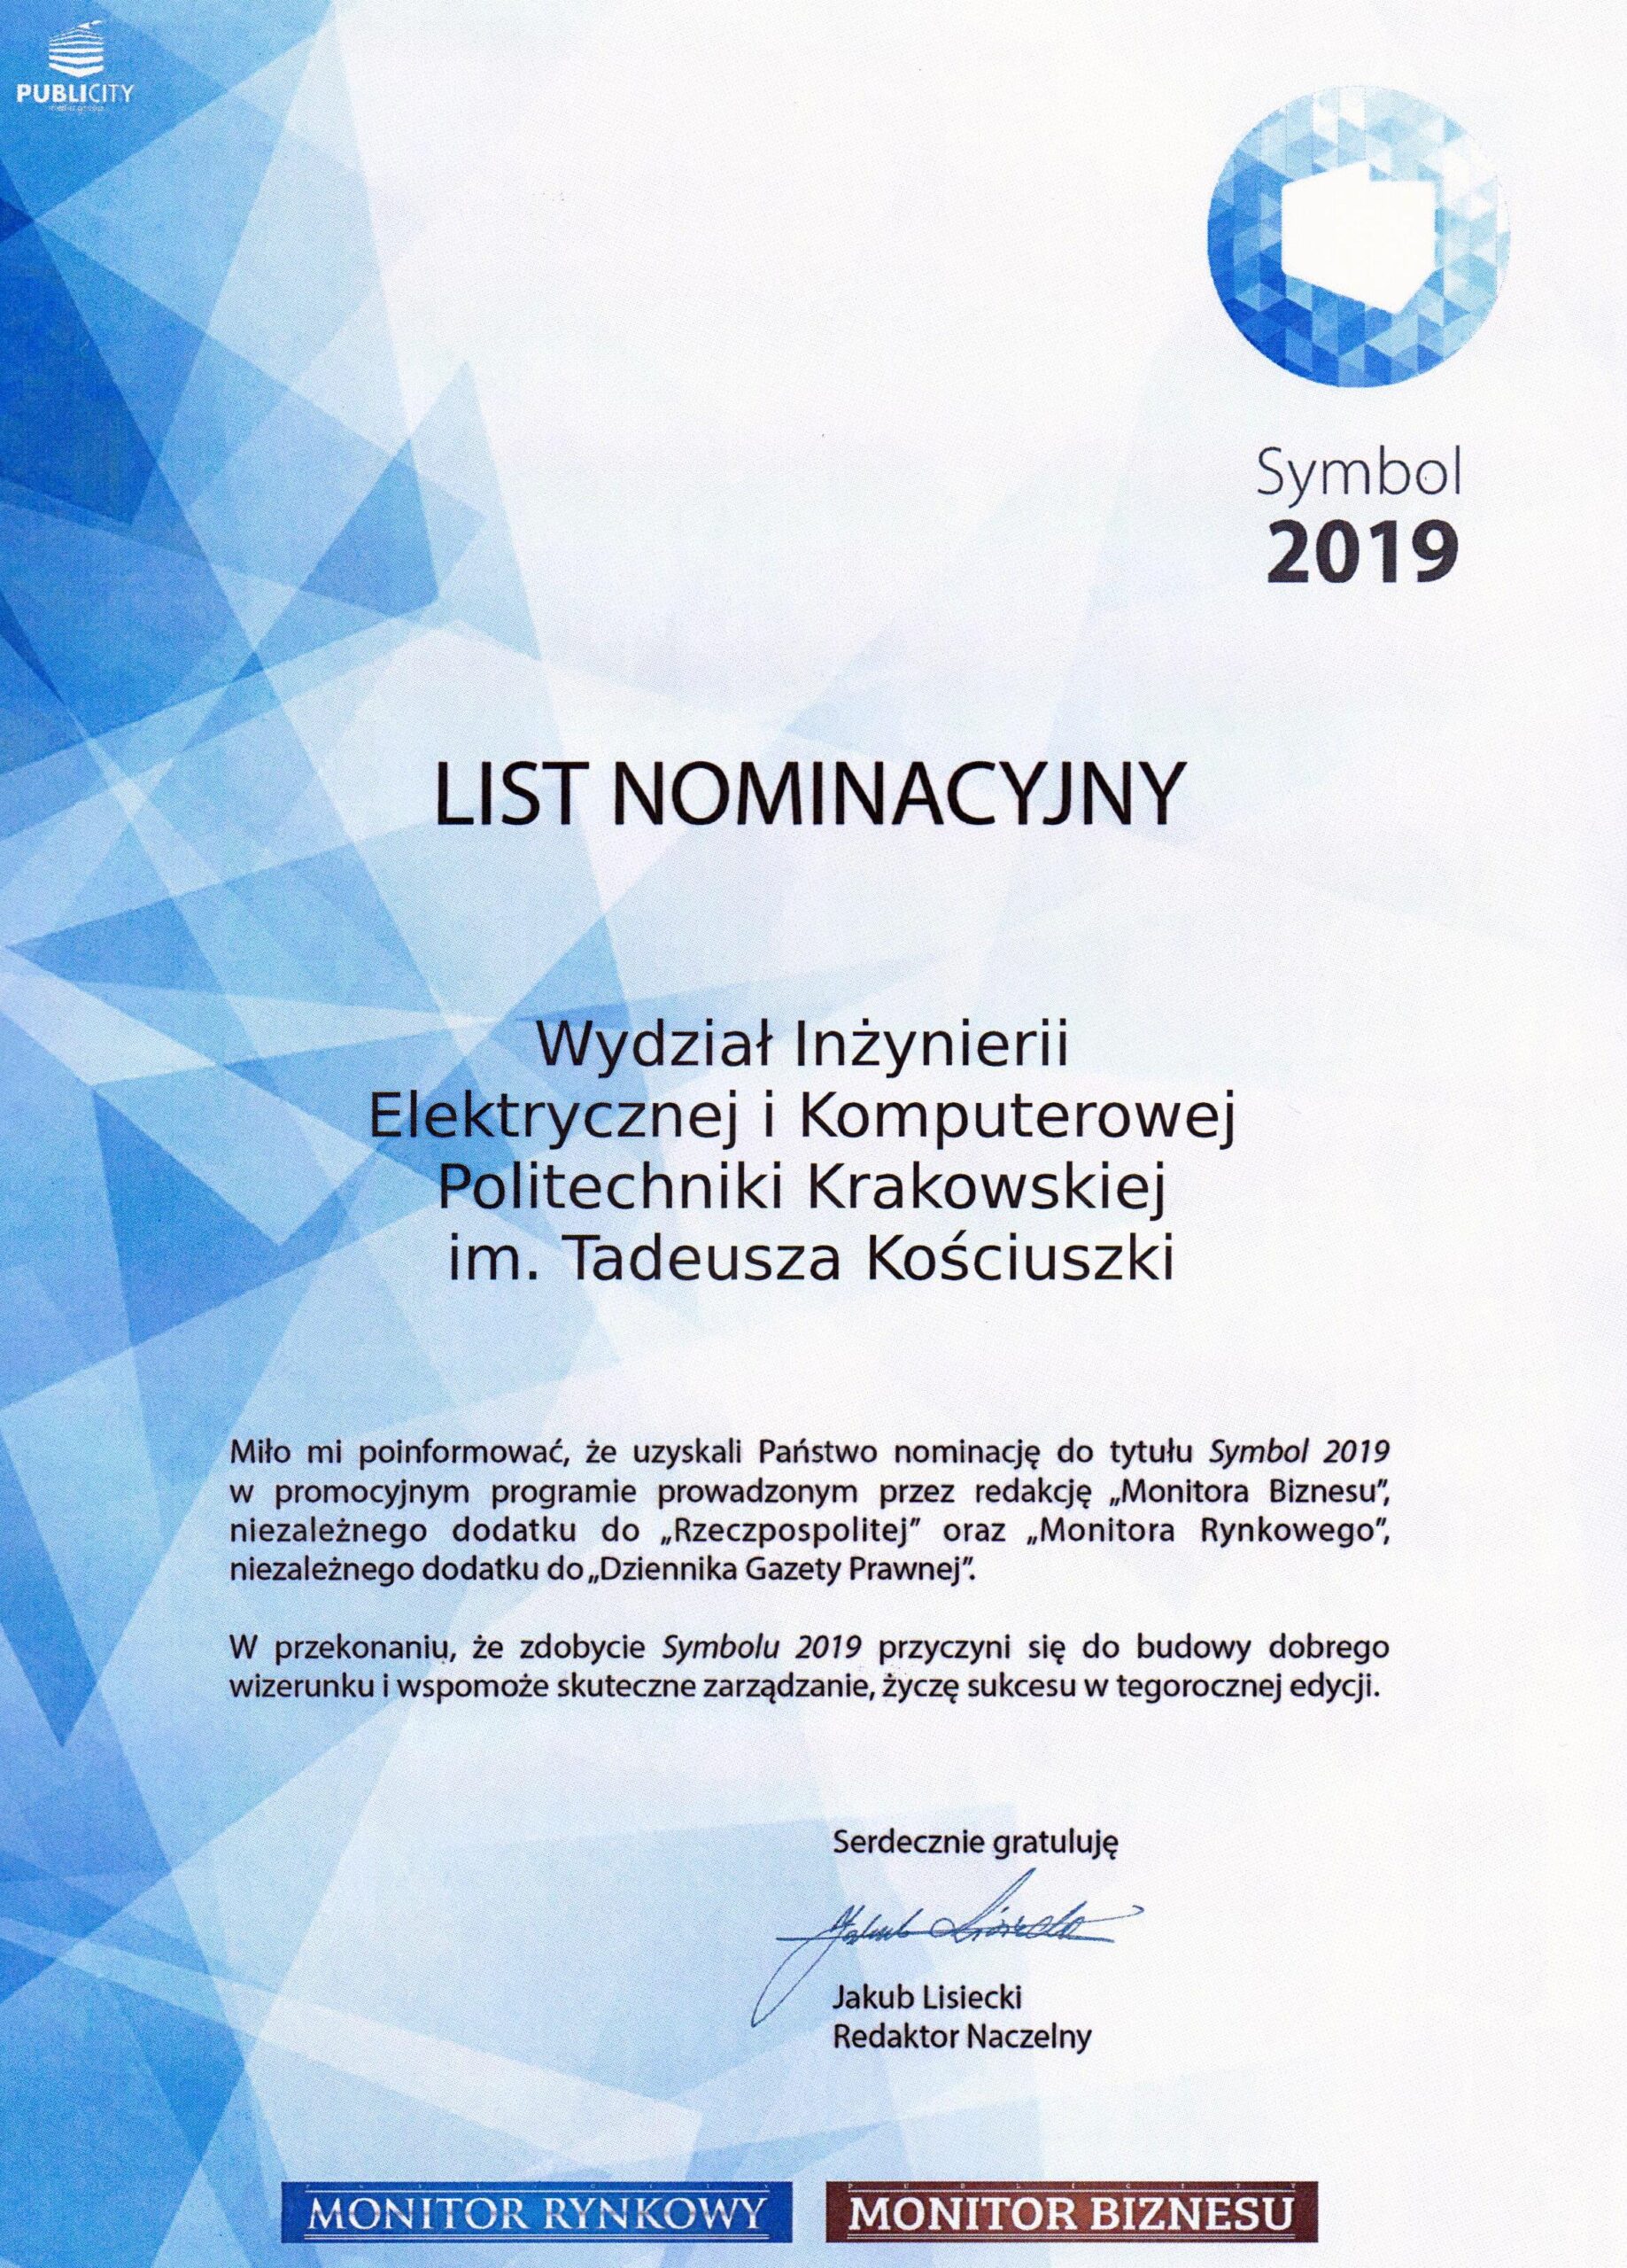 List nominacyjny